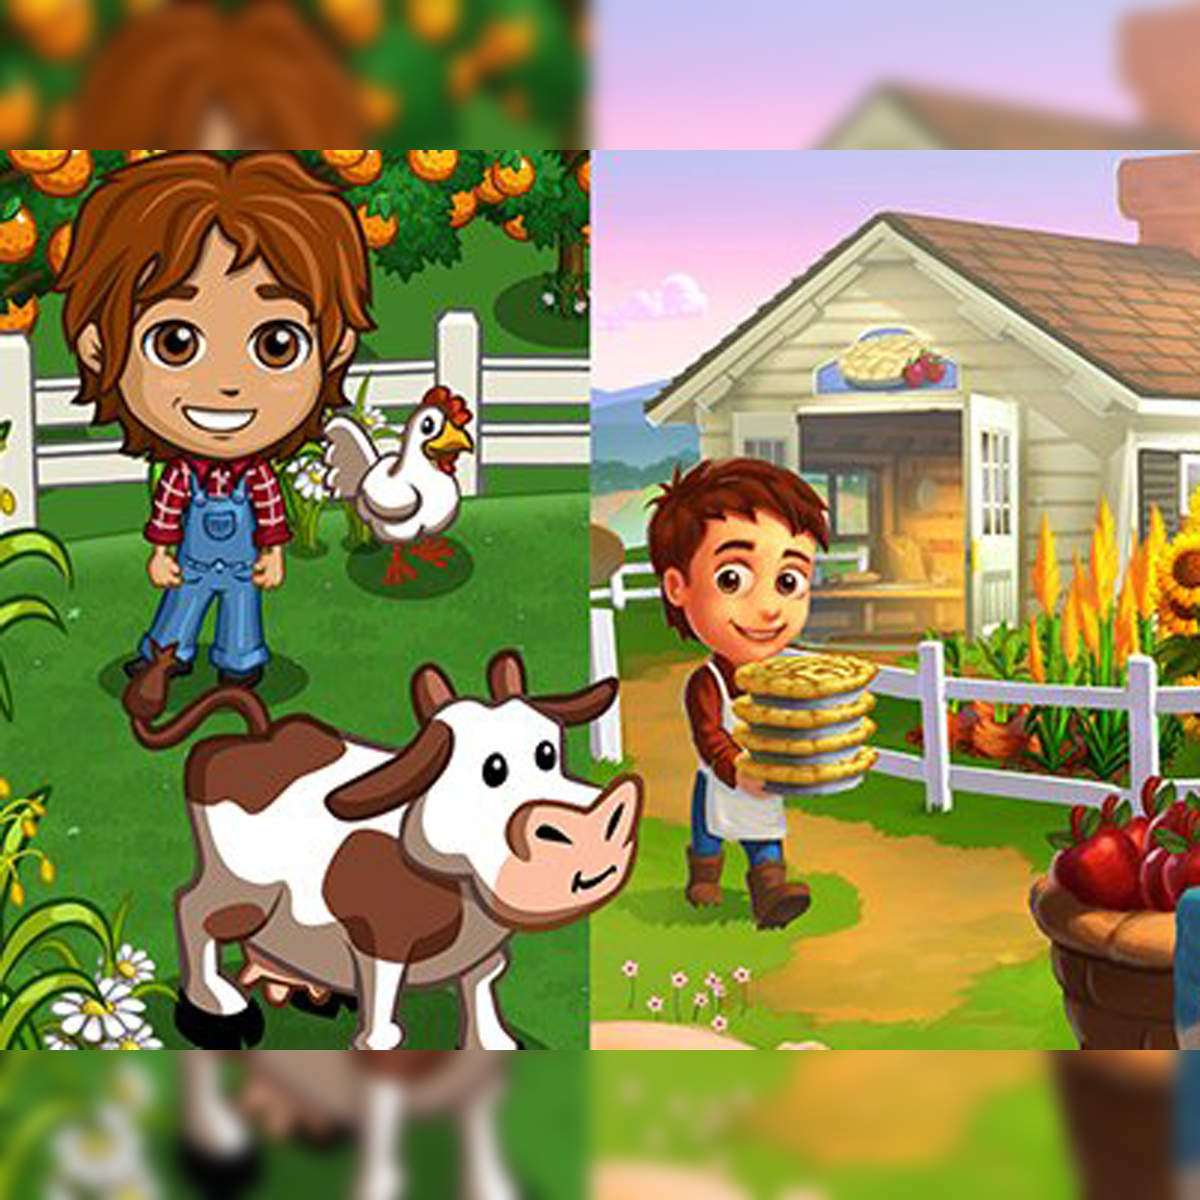 Back to the Farm: Zynga Launches FarmVille 2